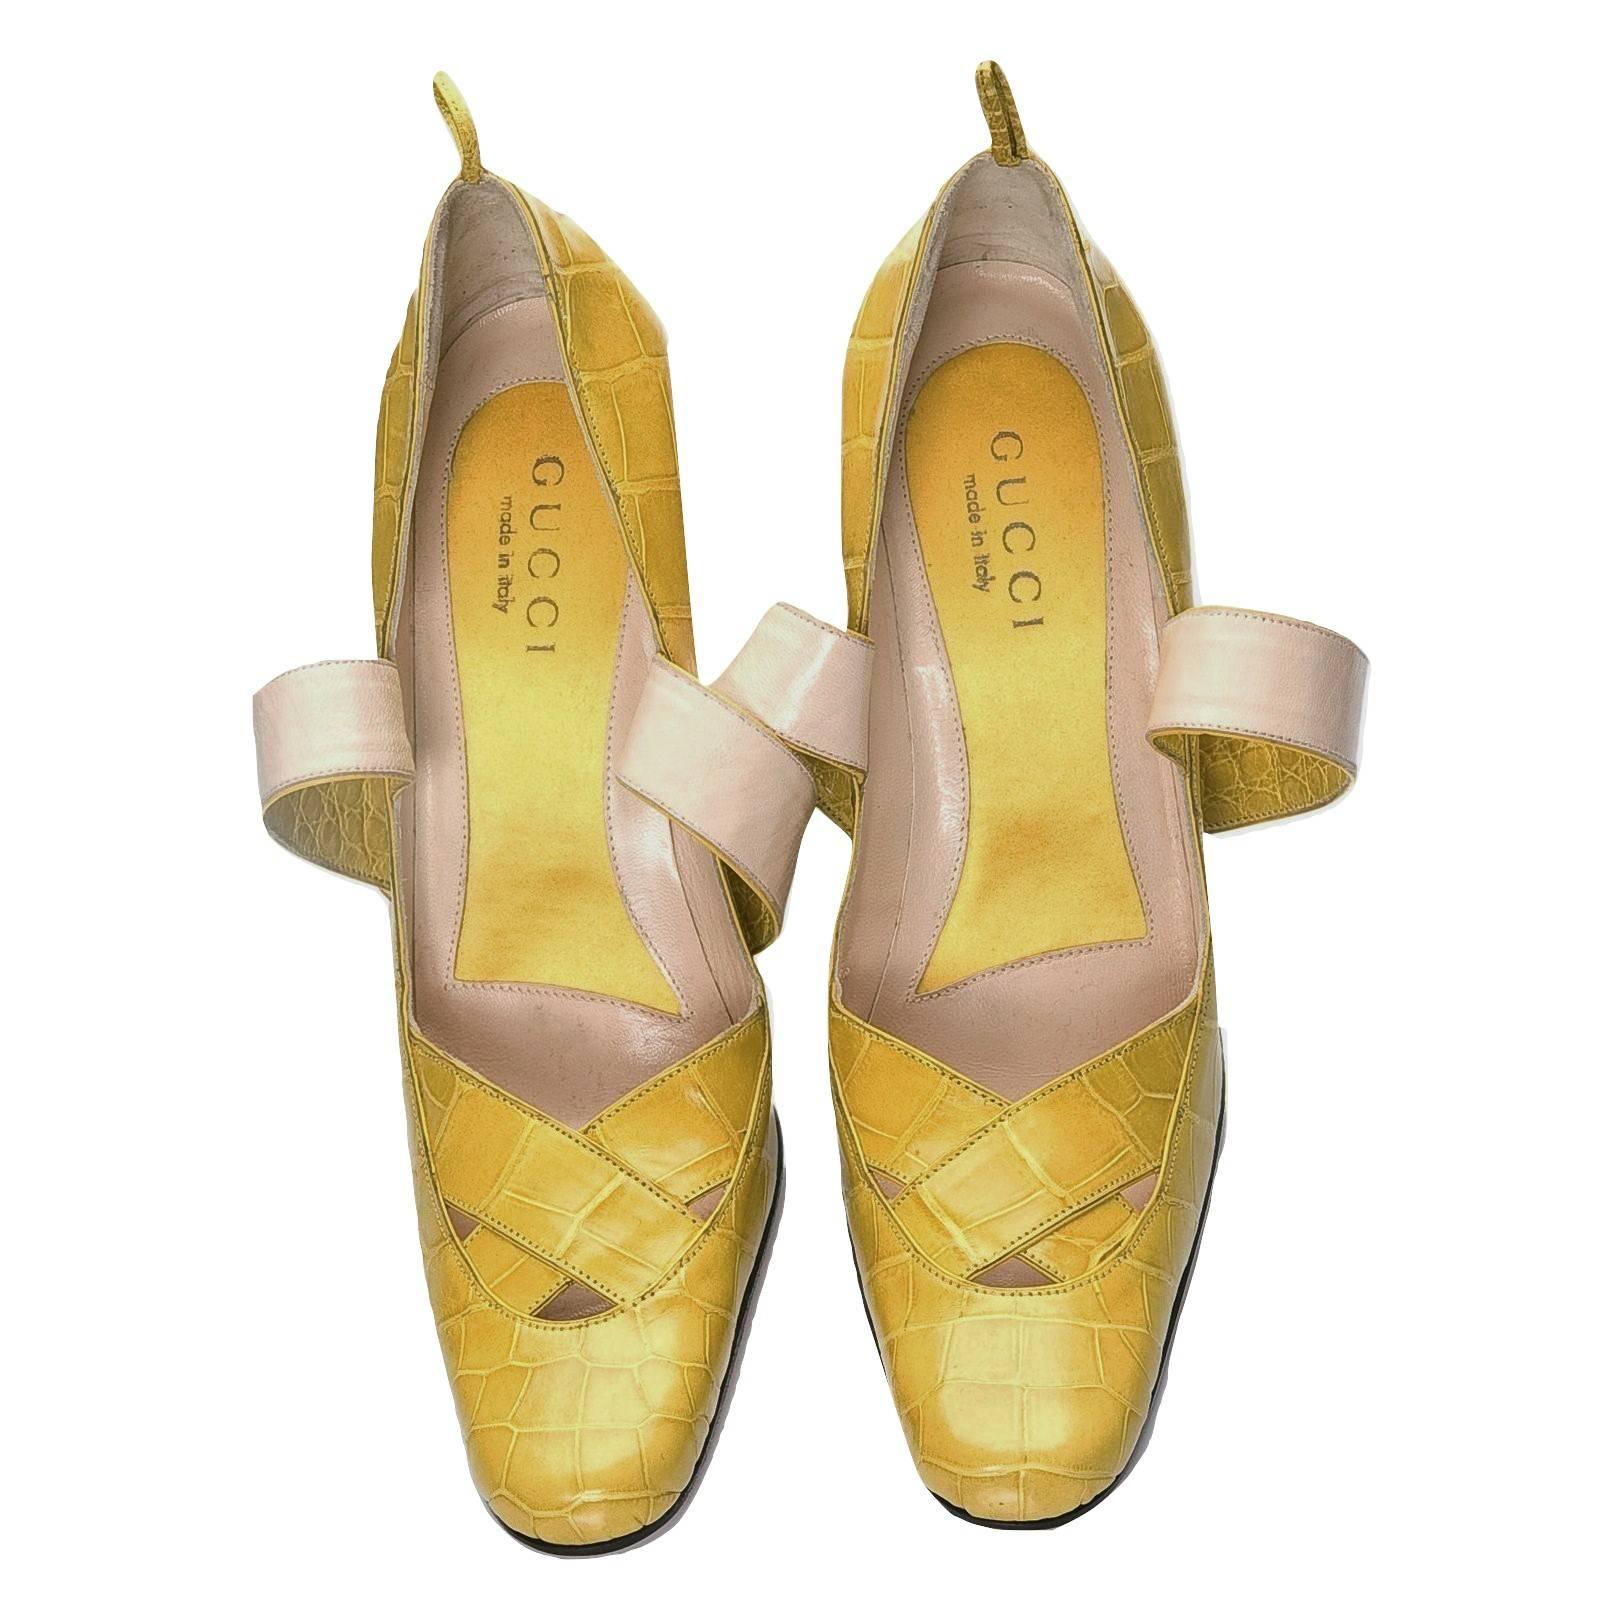 New Tom Ford for Gucci Crocodile Ballerina Heels Pumps Sz 39 3